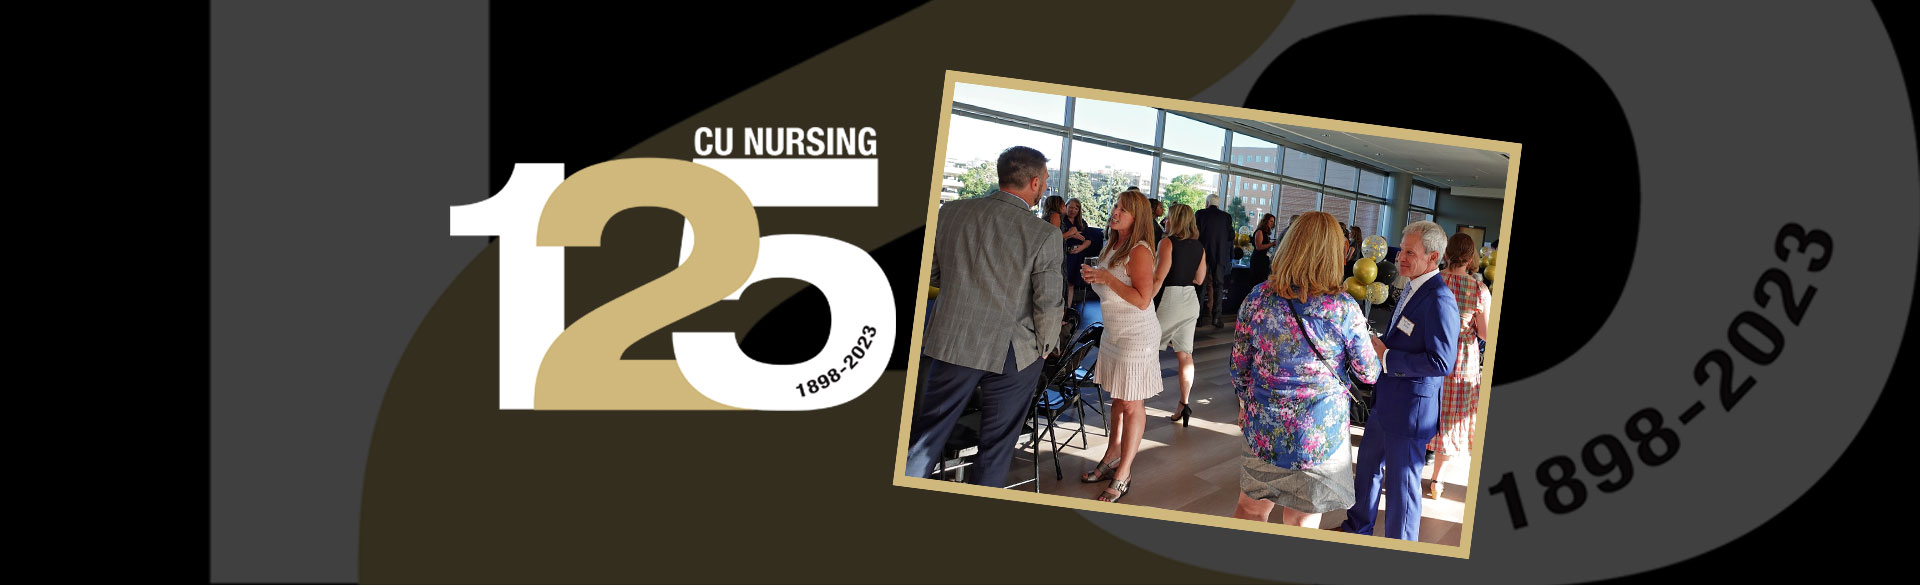 CU Nursing's 125th Anniversary Celebration